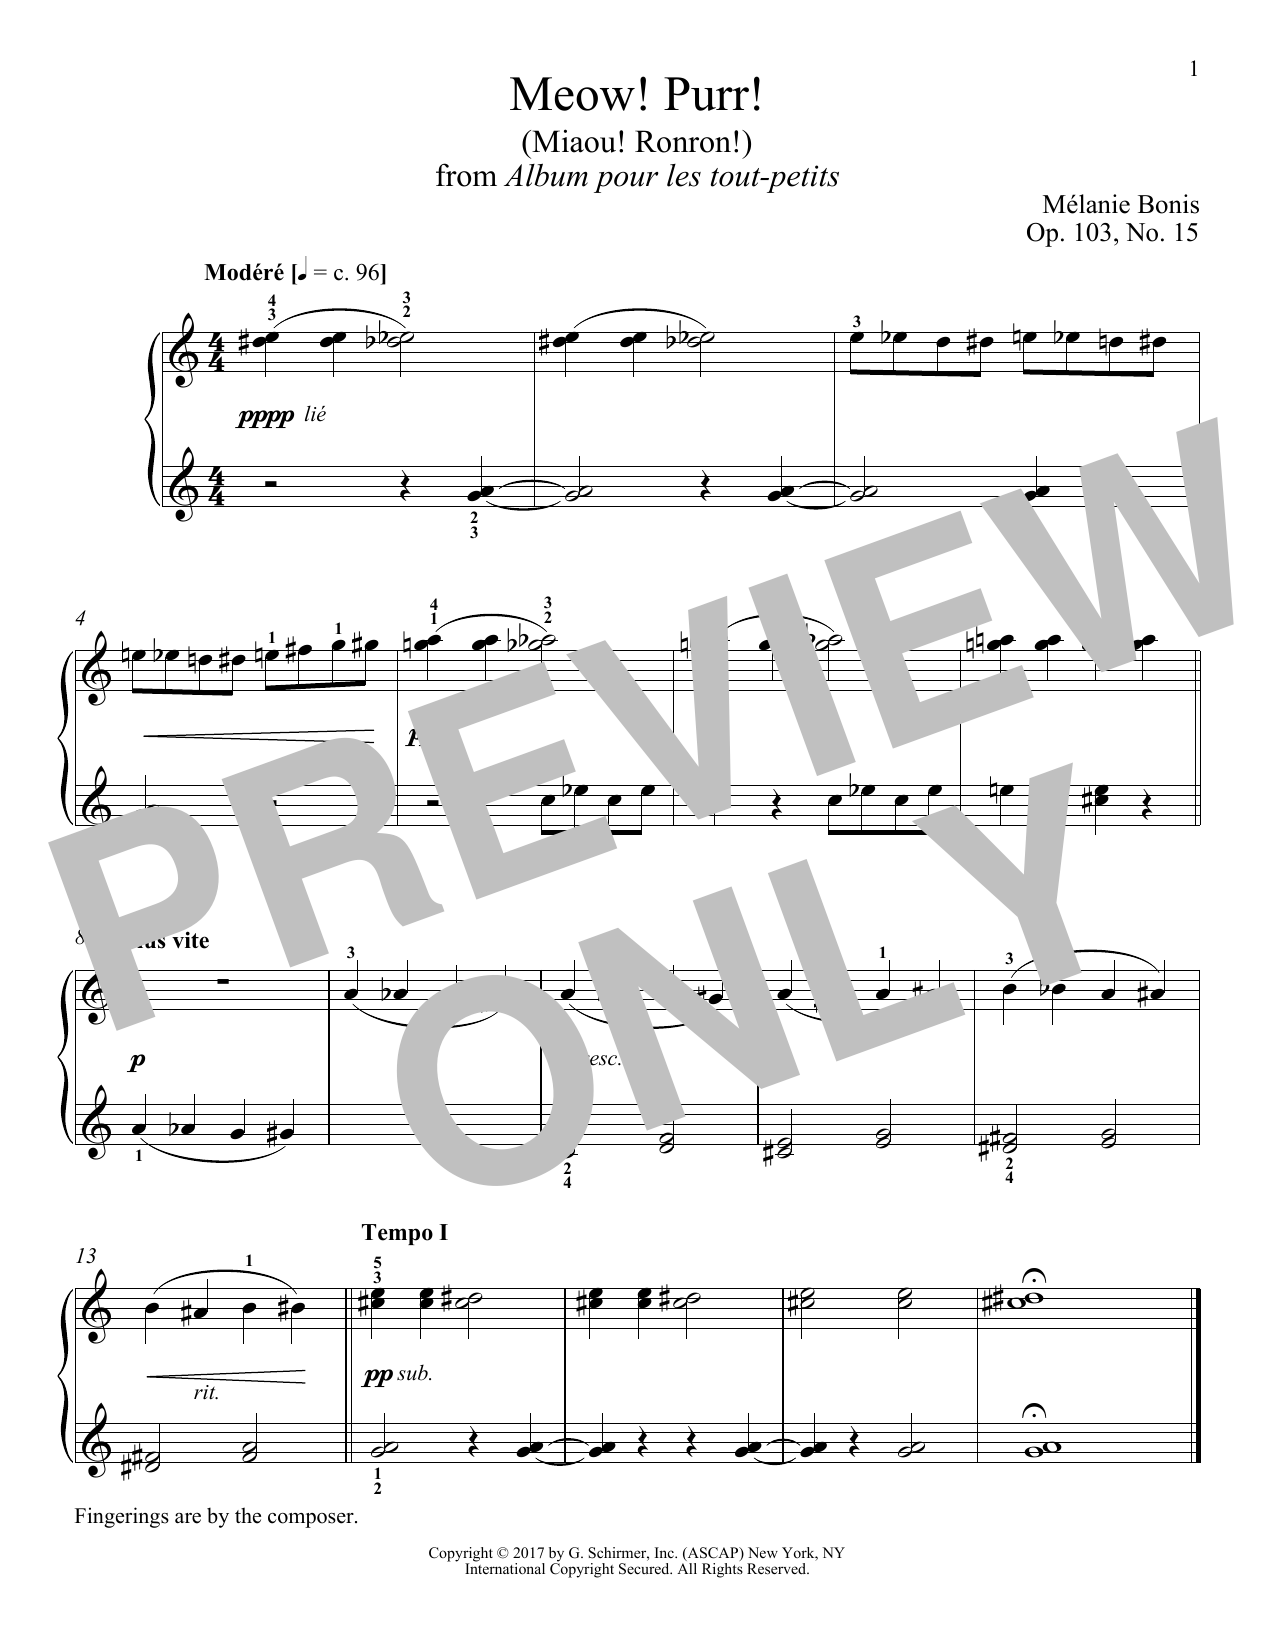 Melanie Bonis Meow! Purr! (Miaou! Ronron!) Sheet Music Notes & Chords for Piano - Download or Print PDF